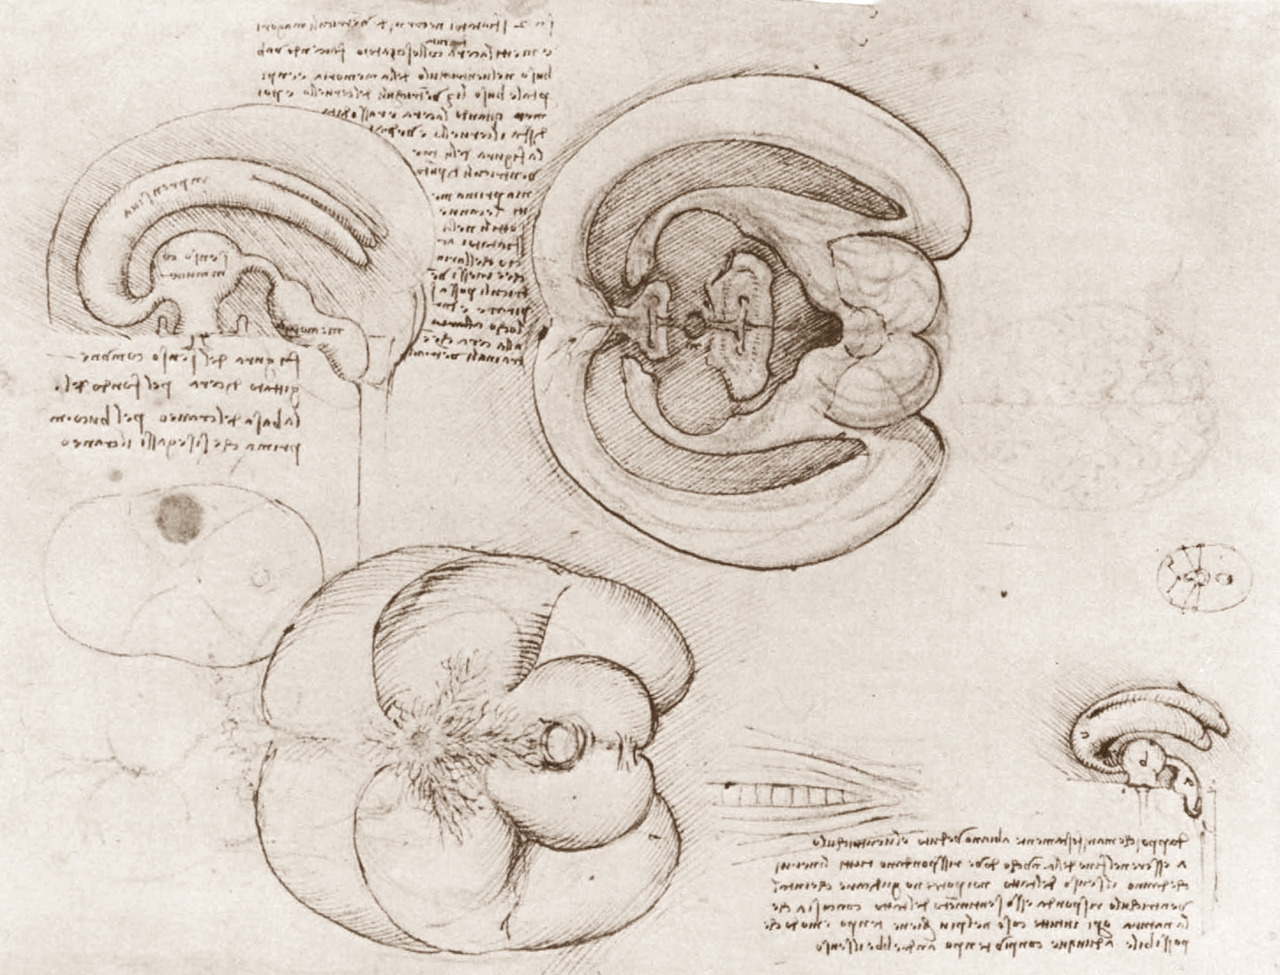 Leonardo+da+Vinci-1452-1519 (763).jpg